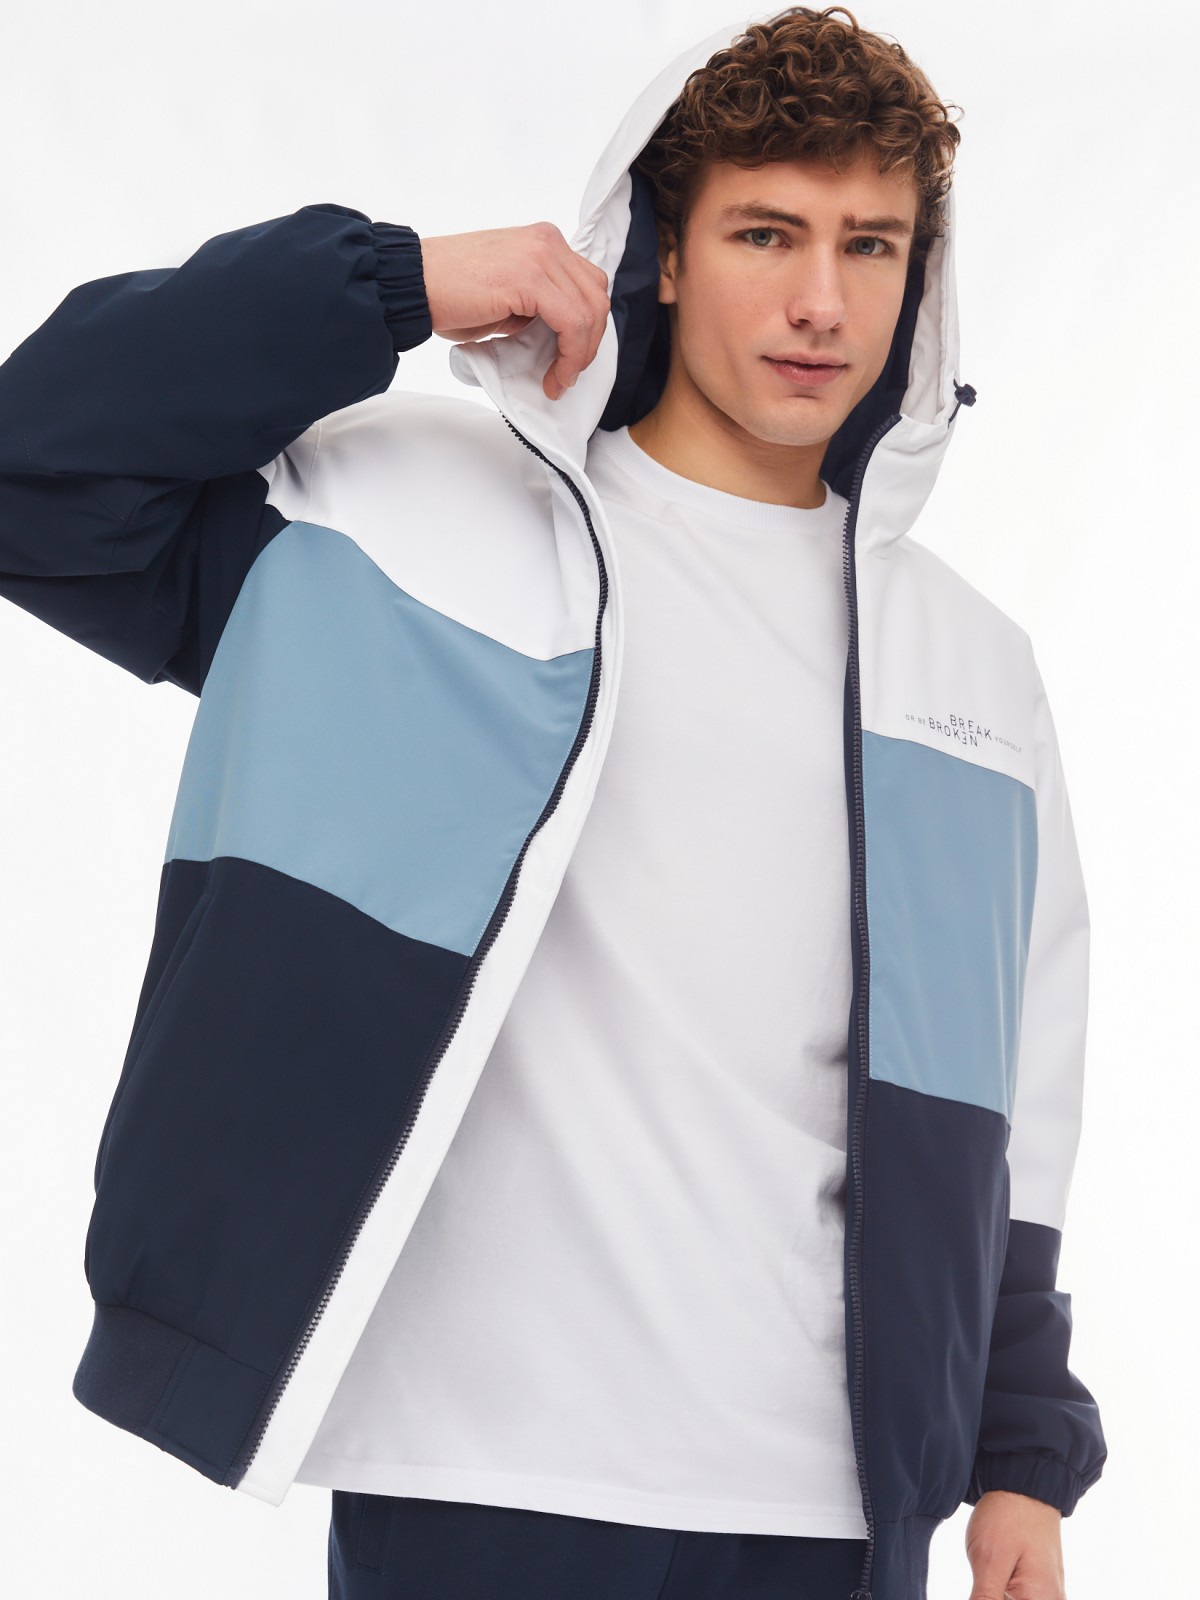 Утеплённая куртка-бомбер на синтепоне с капюшоном zolla 01412510L054, цвет синий, размер L - фото 1